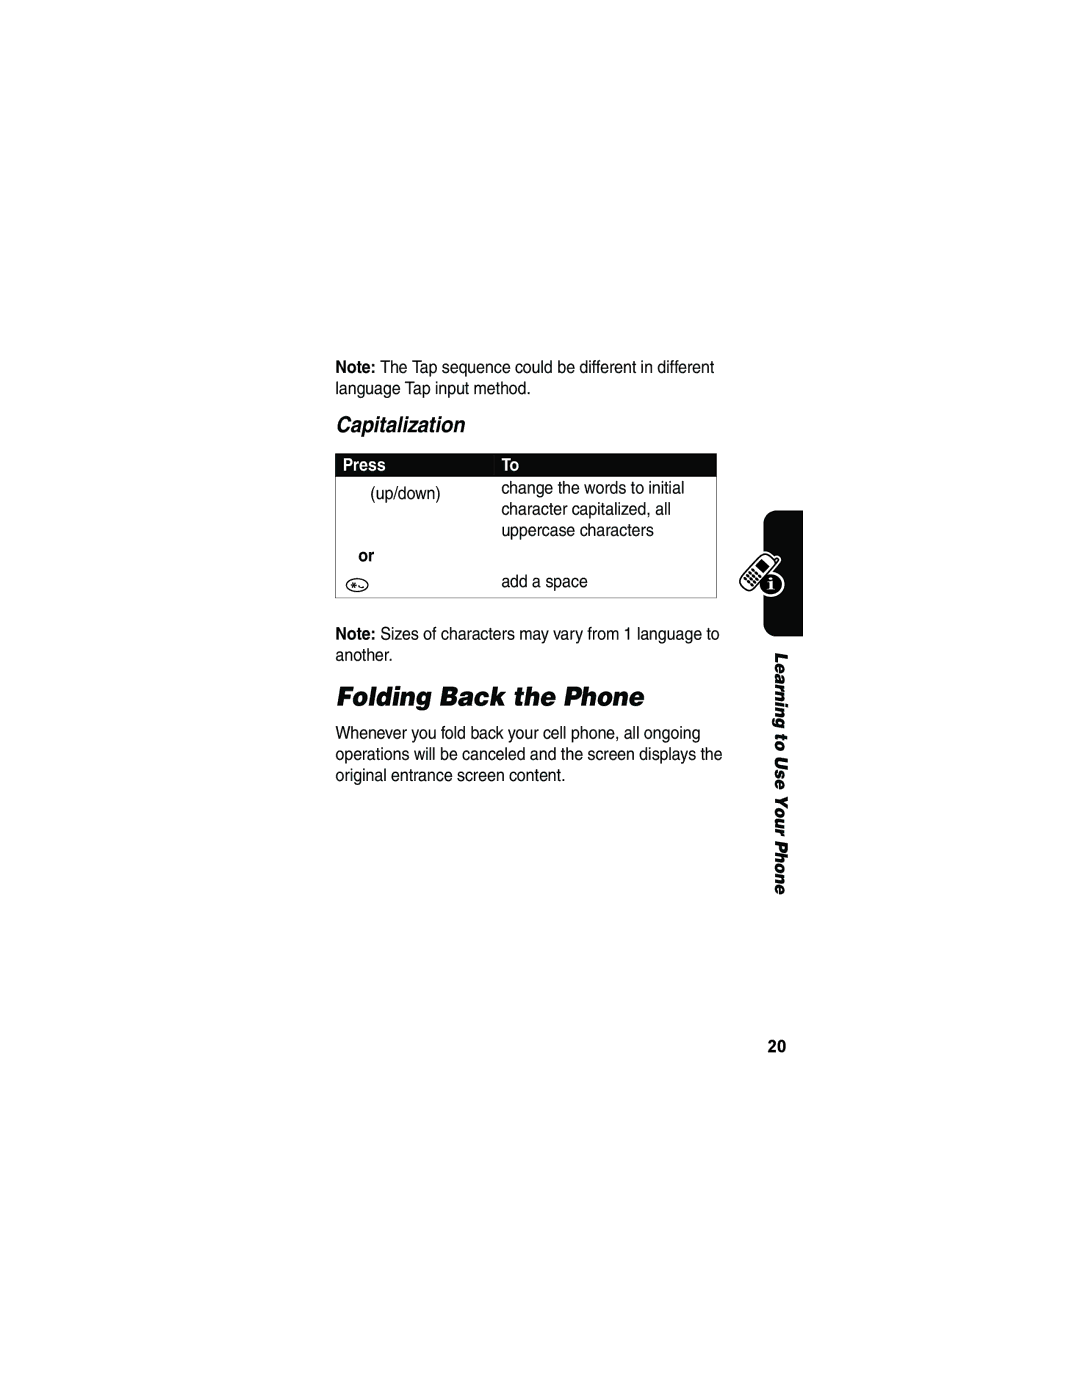 Motorola V173 manual Folding Back the Phone, Capitalization, Press 